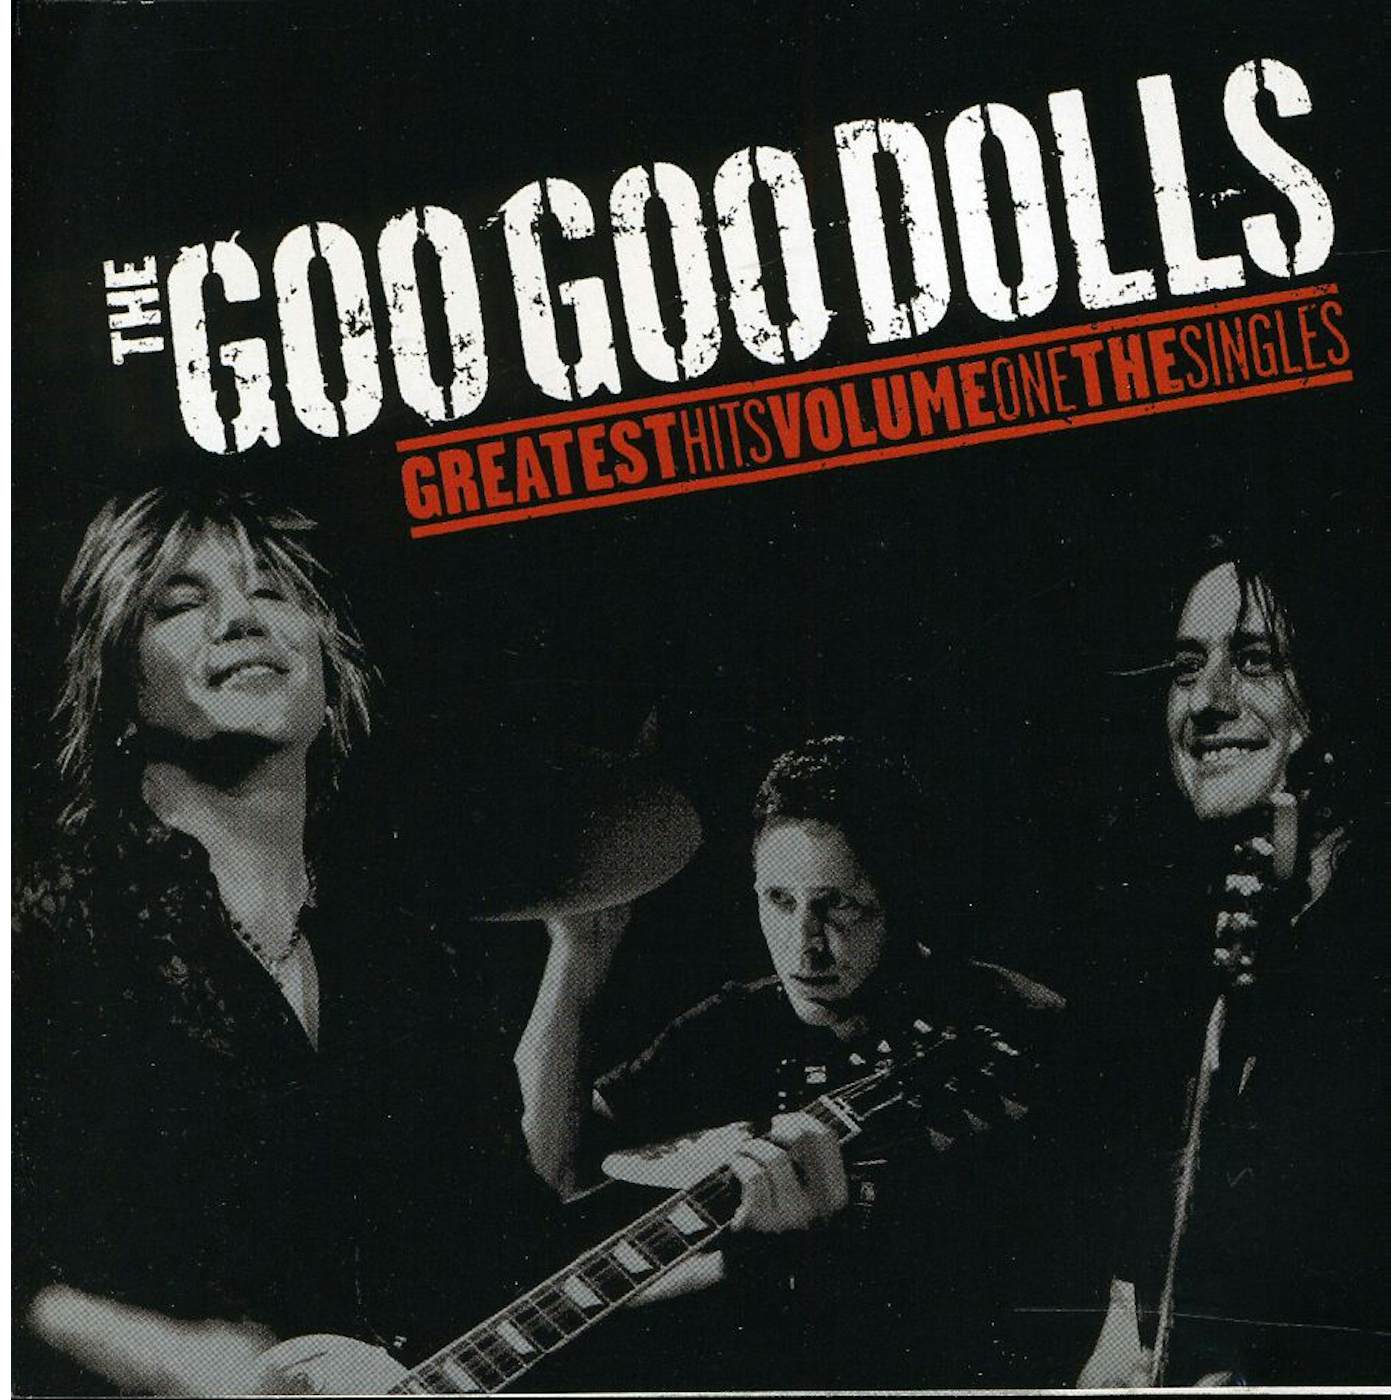 The Goo Goo DollsGREATEST HITS 1: THE SINGLES CD